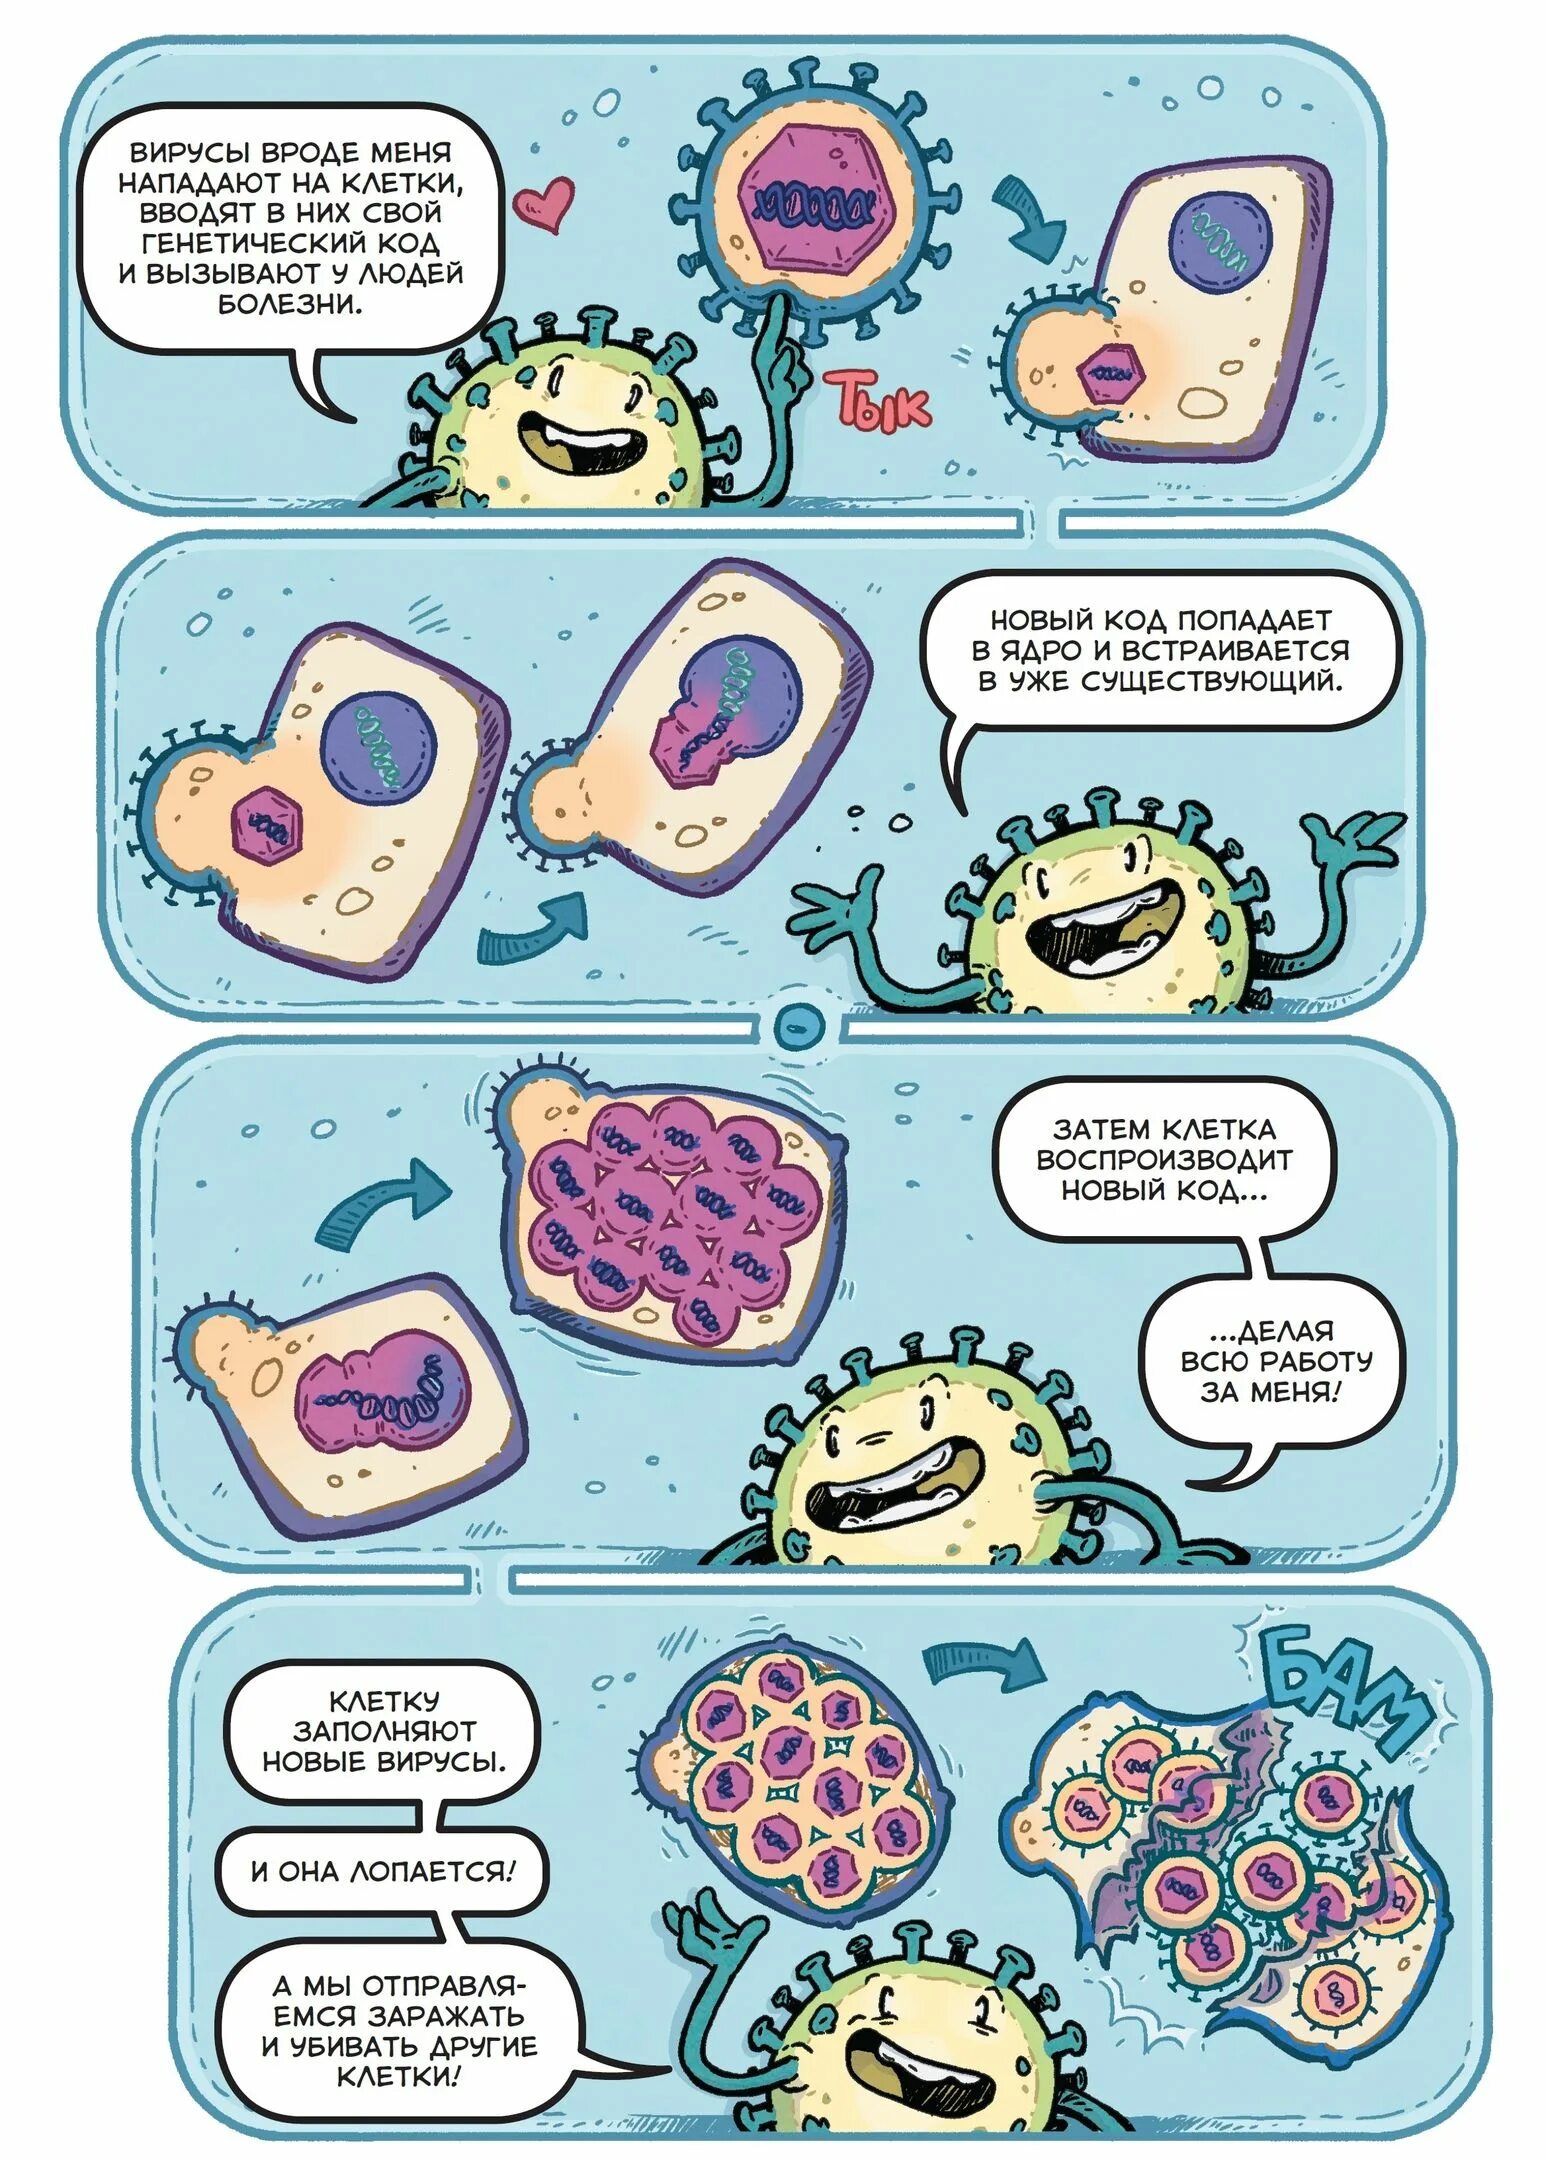 Тема бактерии и вирусы 5 класс. Комикс про бактерии. Комикс бактерии и вирусы. Комикс про вирус. Книги комиксы для детей.